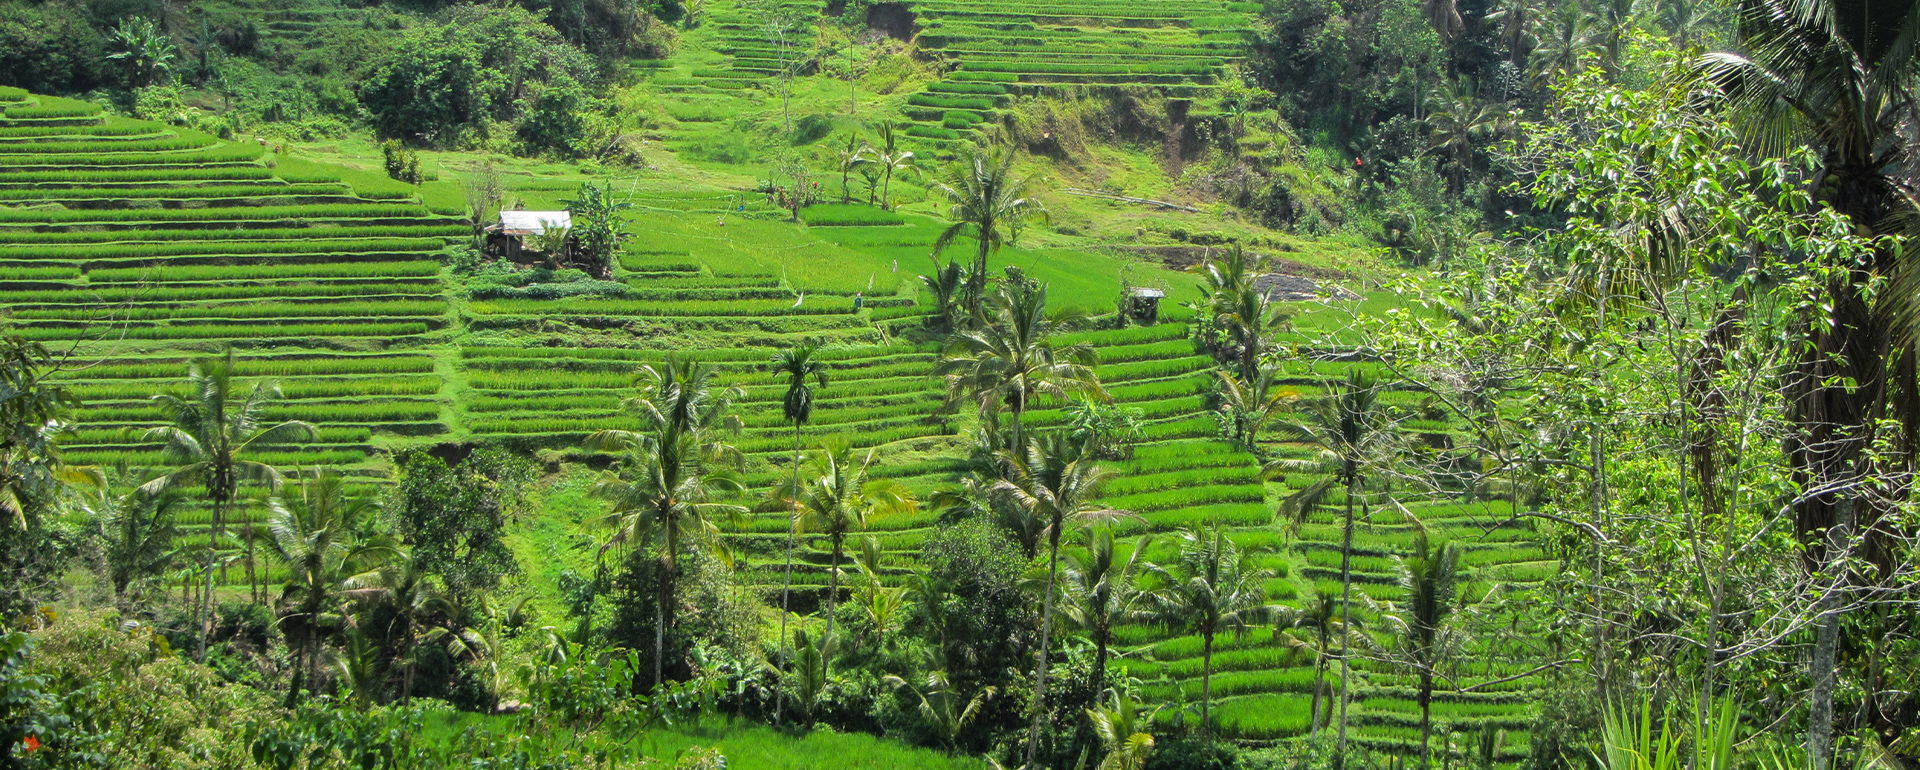 Radreise Bali Reisfelder